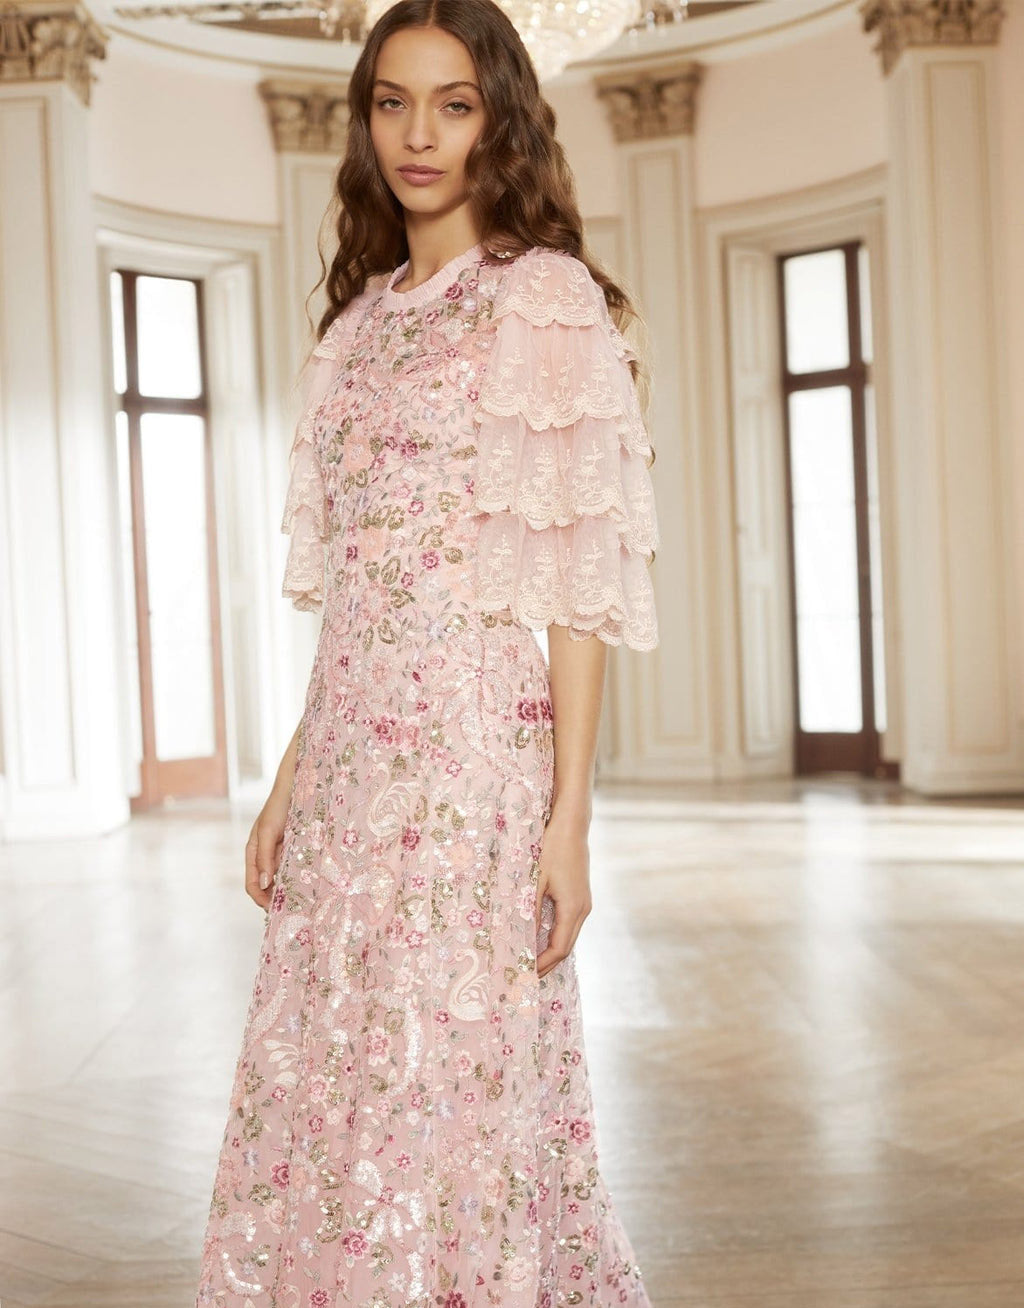 Blushing Floral Gown | Liylah | Modest Gown Rental 14 / Blush / 12 Day Rental